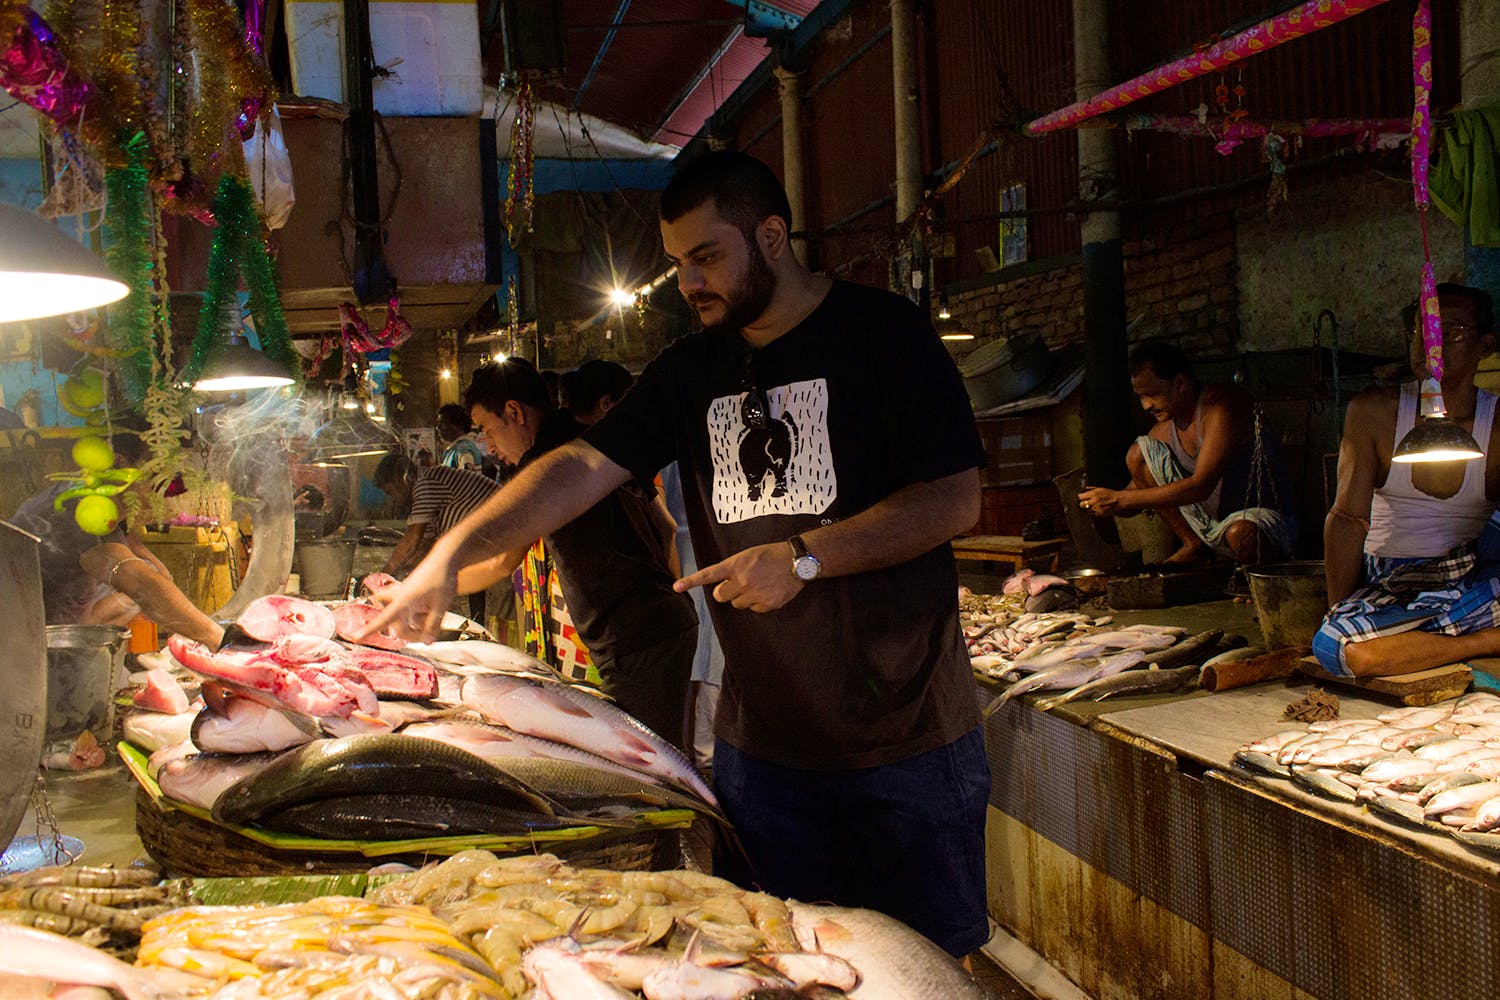 Market,Selling,Public space,Human settlement,Food,Fishmonger,Cuisine,Delicacy,Seafood,Flesh